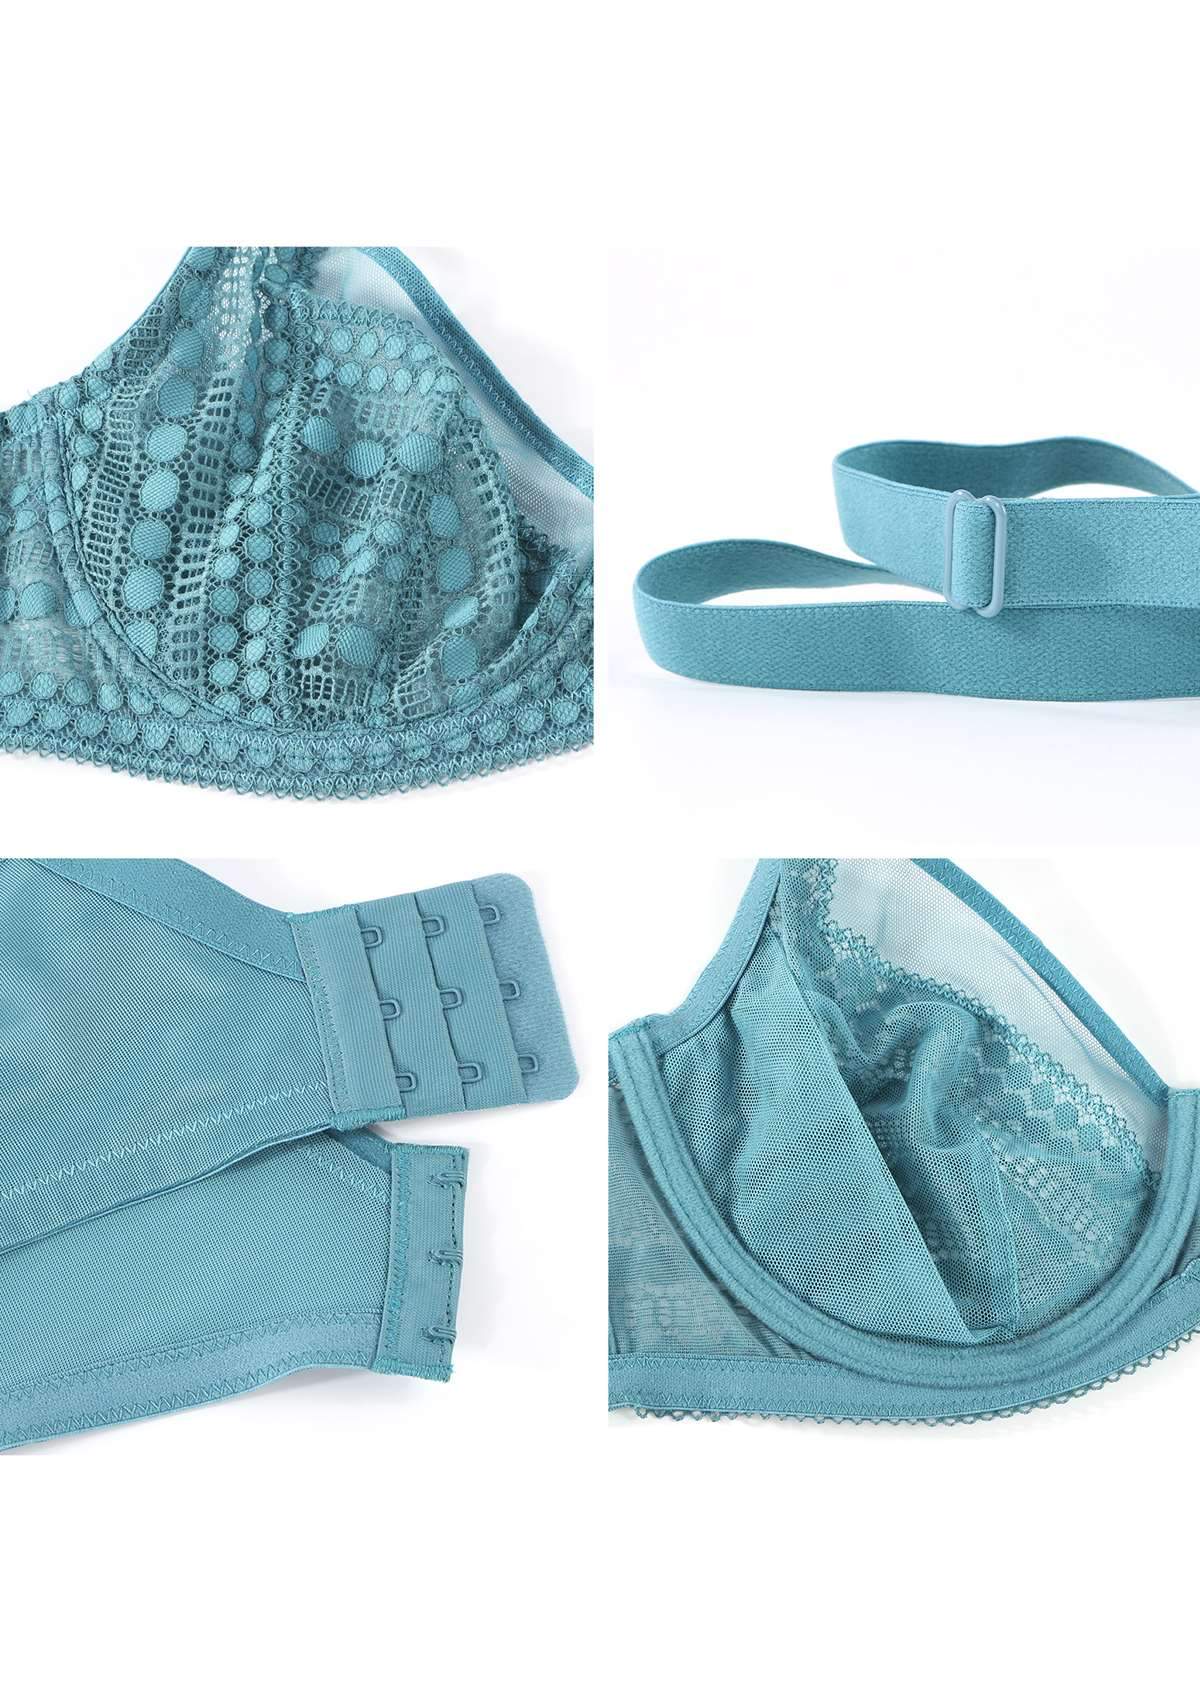 HSIA Heroine Matching Bra And Underwear Set: Bra For Big Boobs - Brittany Blue / 44 / DD/E